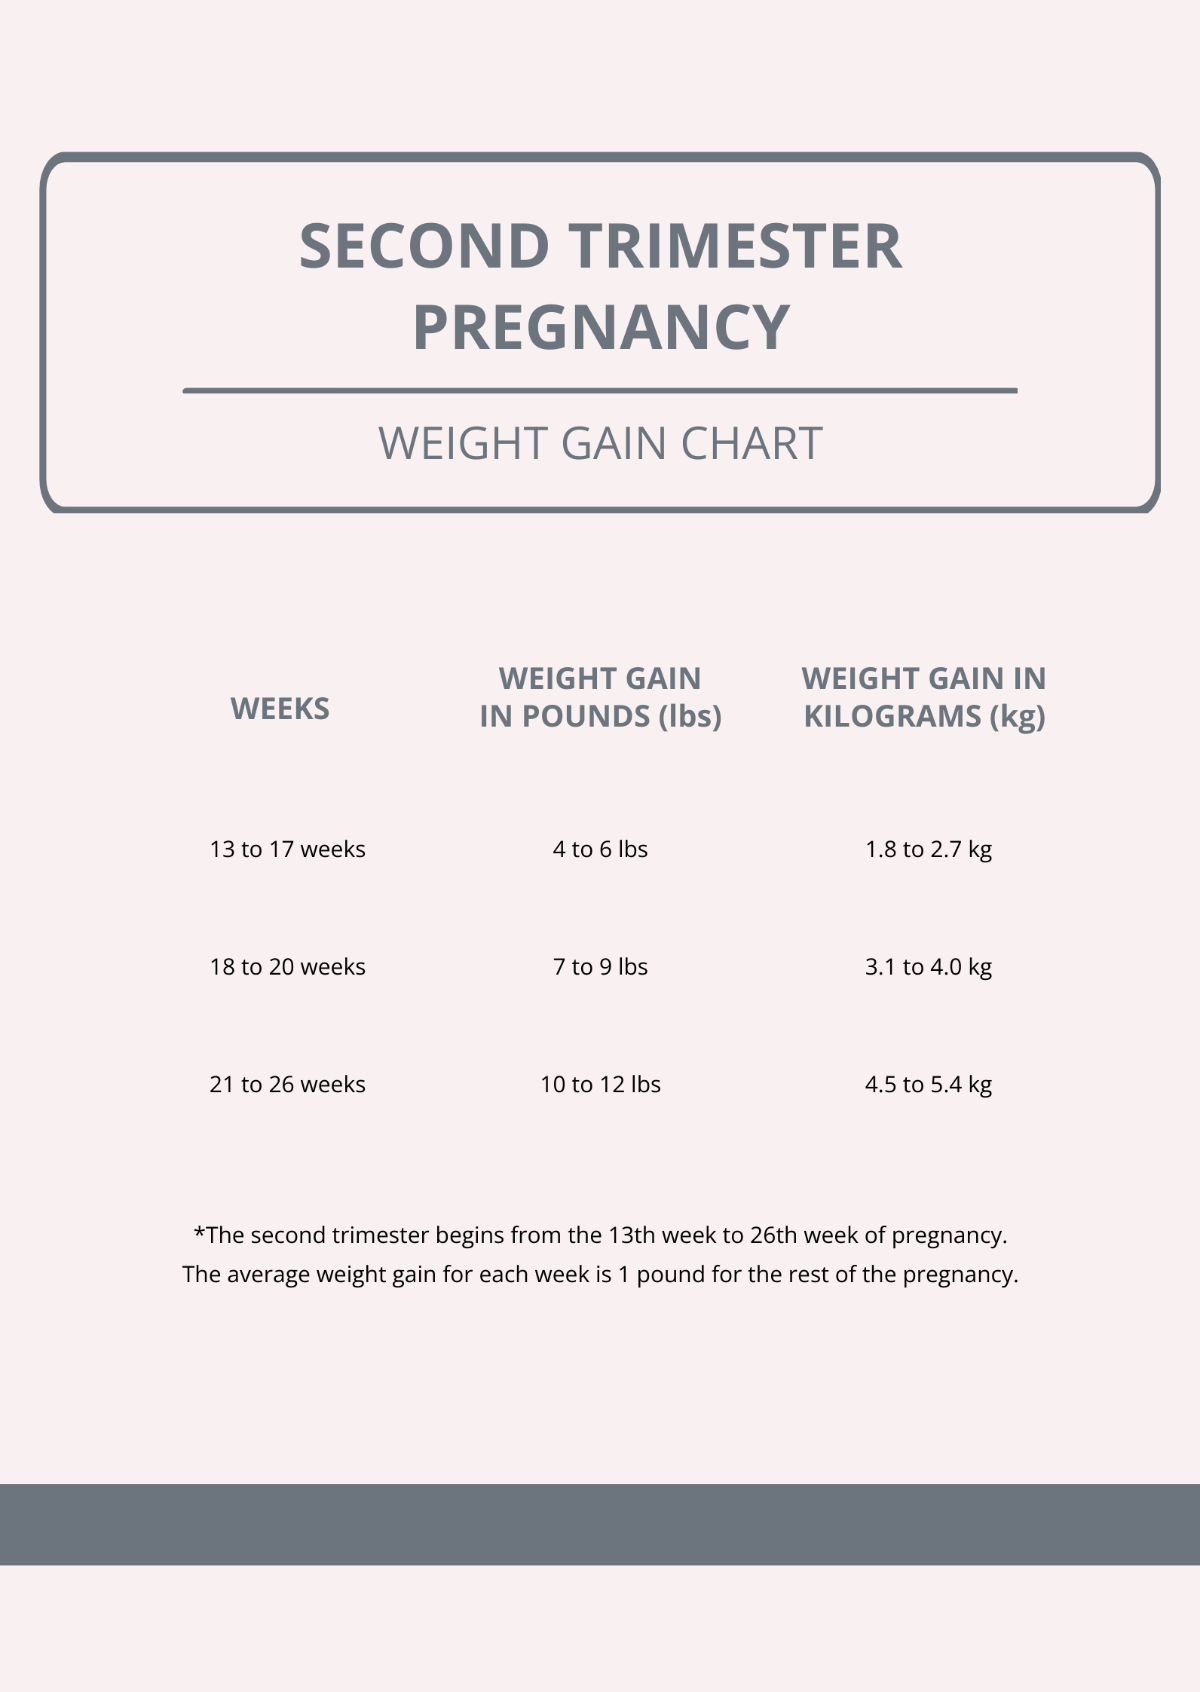 Second Trimester Pregnancy Weight Gain Chart Template